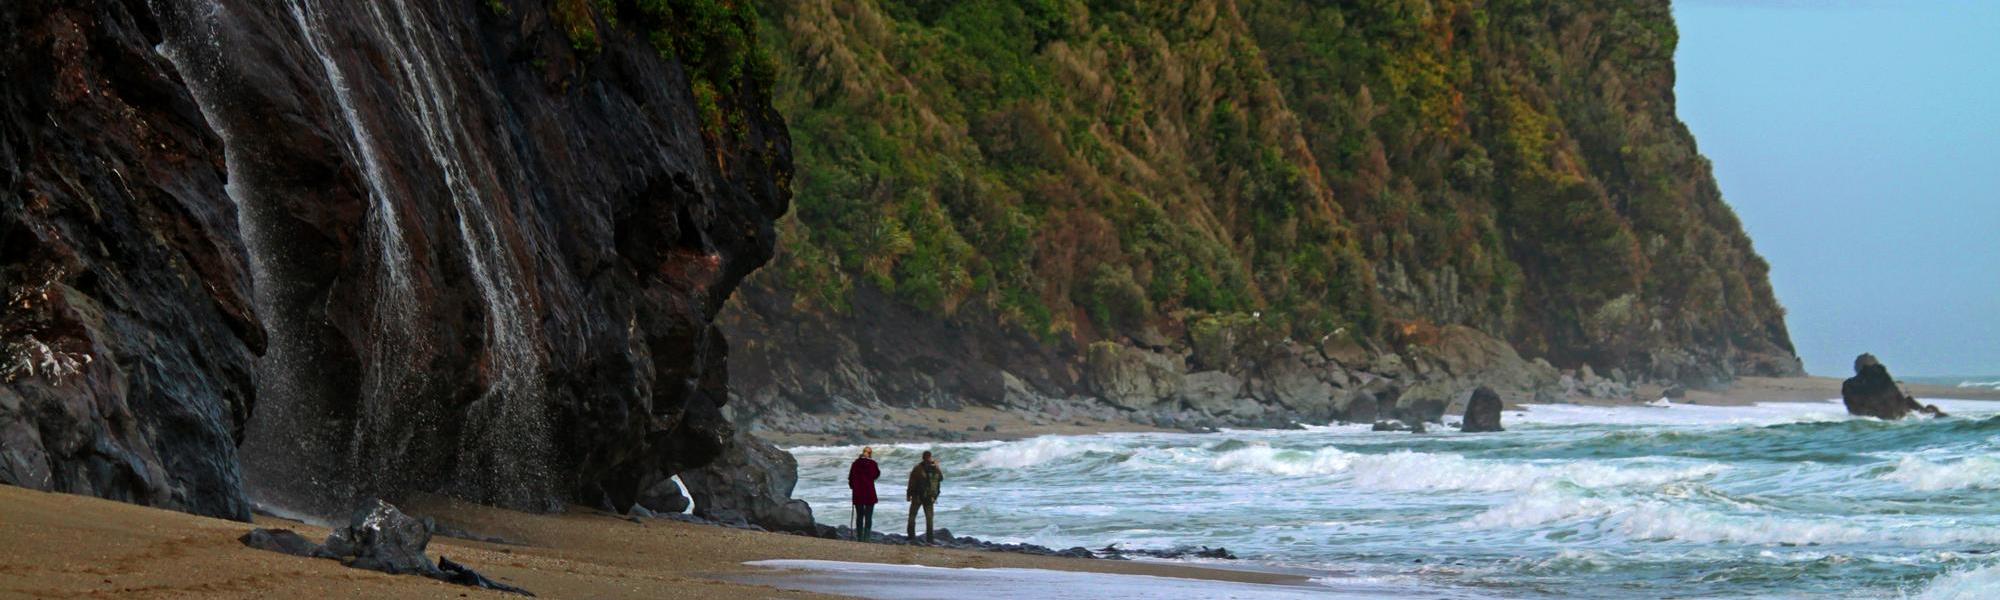 Walk the wild and dramatic Moeraki Coastline in New Zealand's South Island.